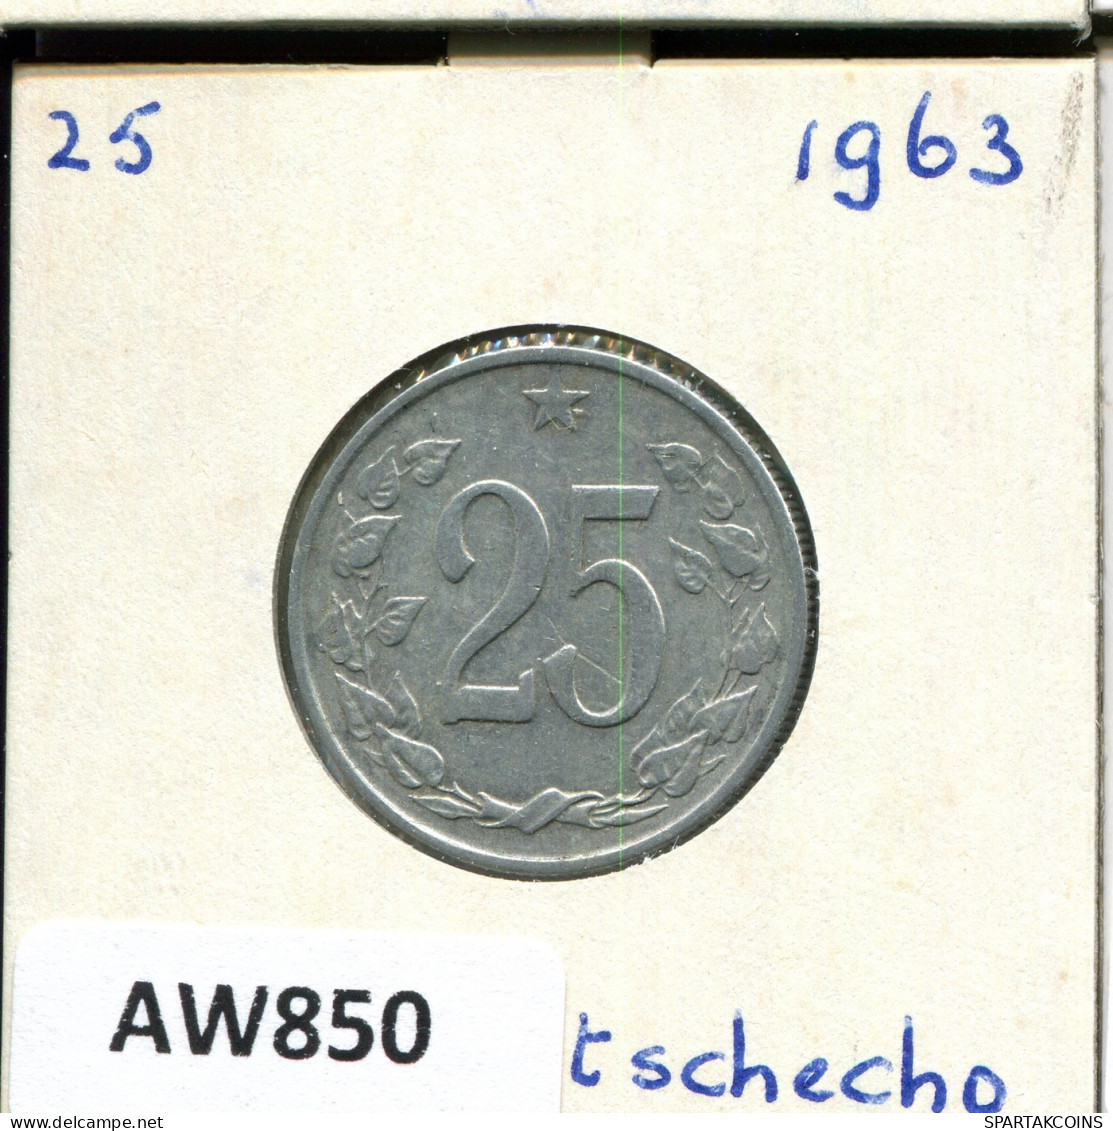 25 KORUN 1963 CZECHOSLOVAKIA Coin #AW850.U.A - Czechoslovakia